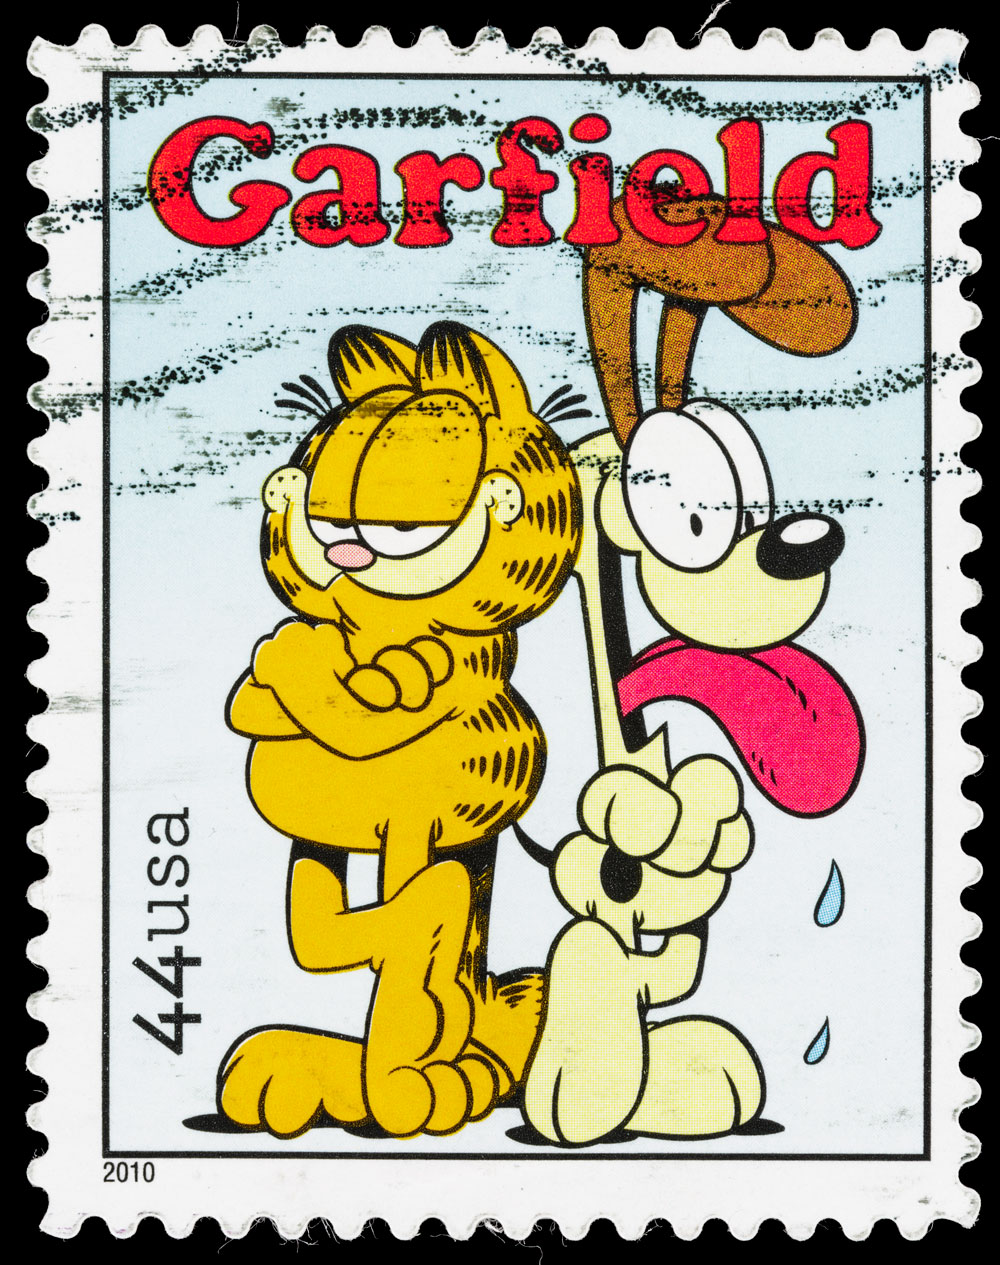 A Garfield post stamp